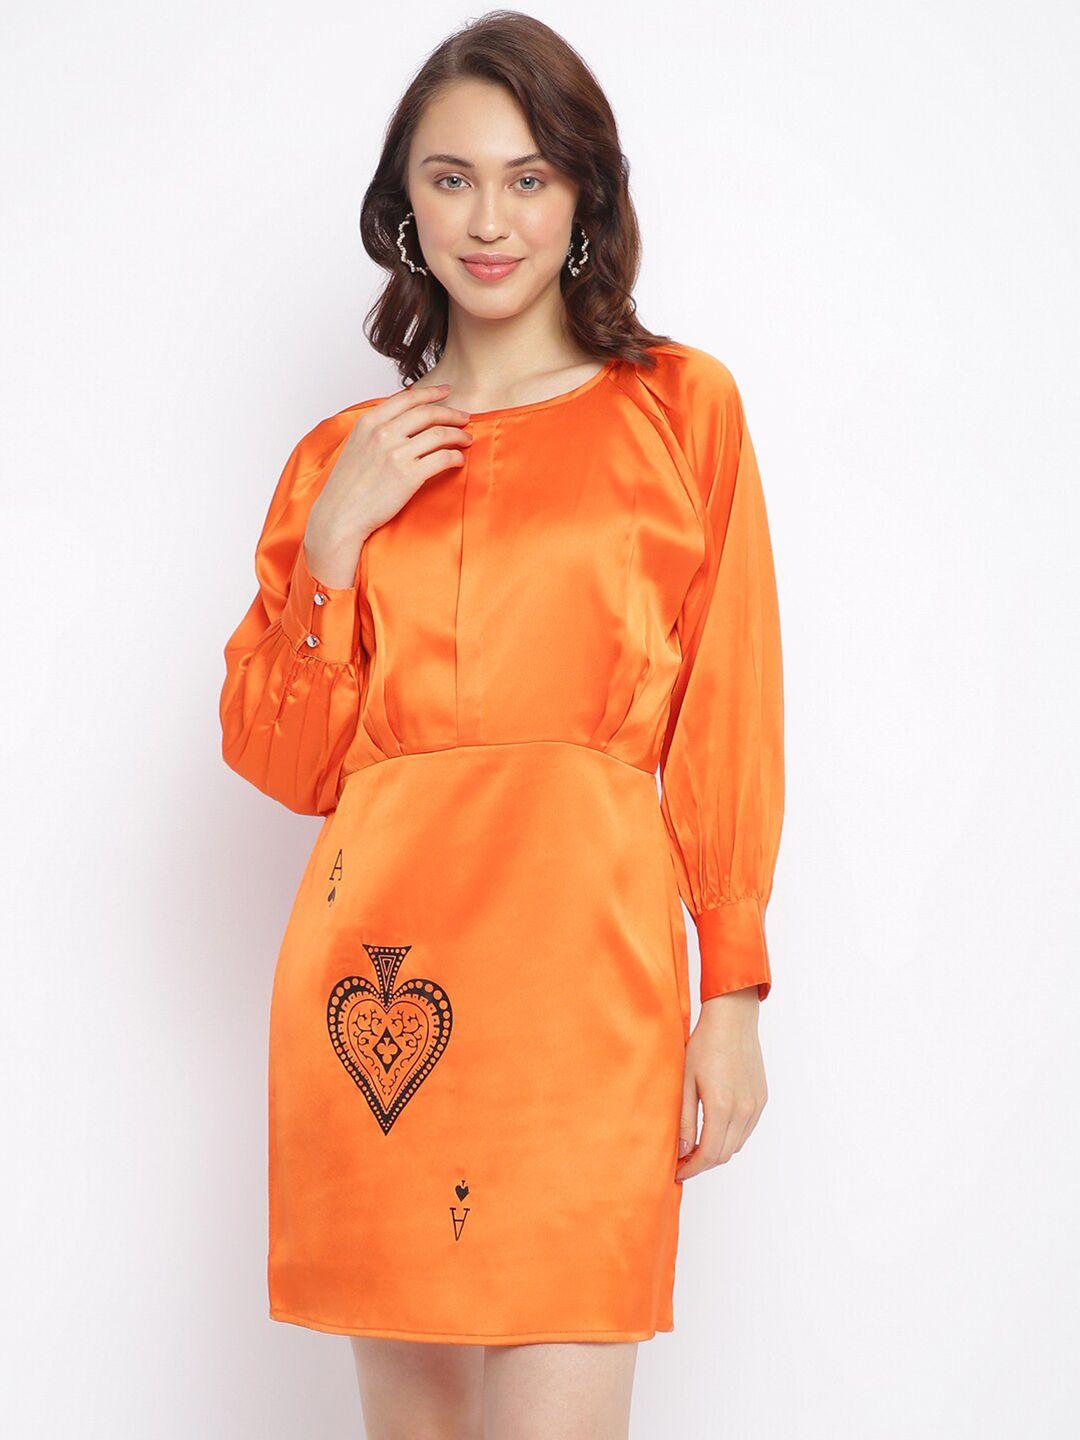 am ma women orange & black printed sheath dress